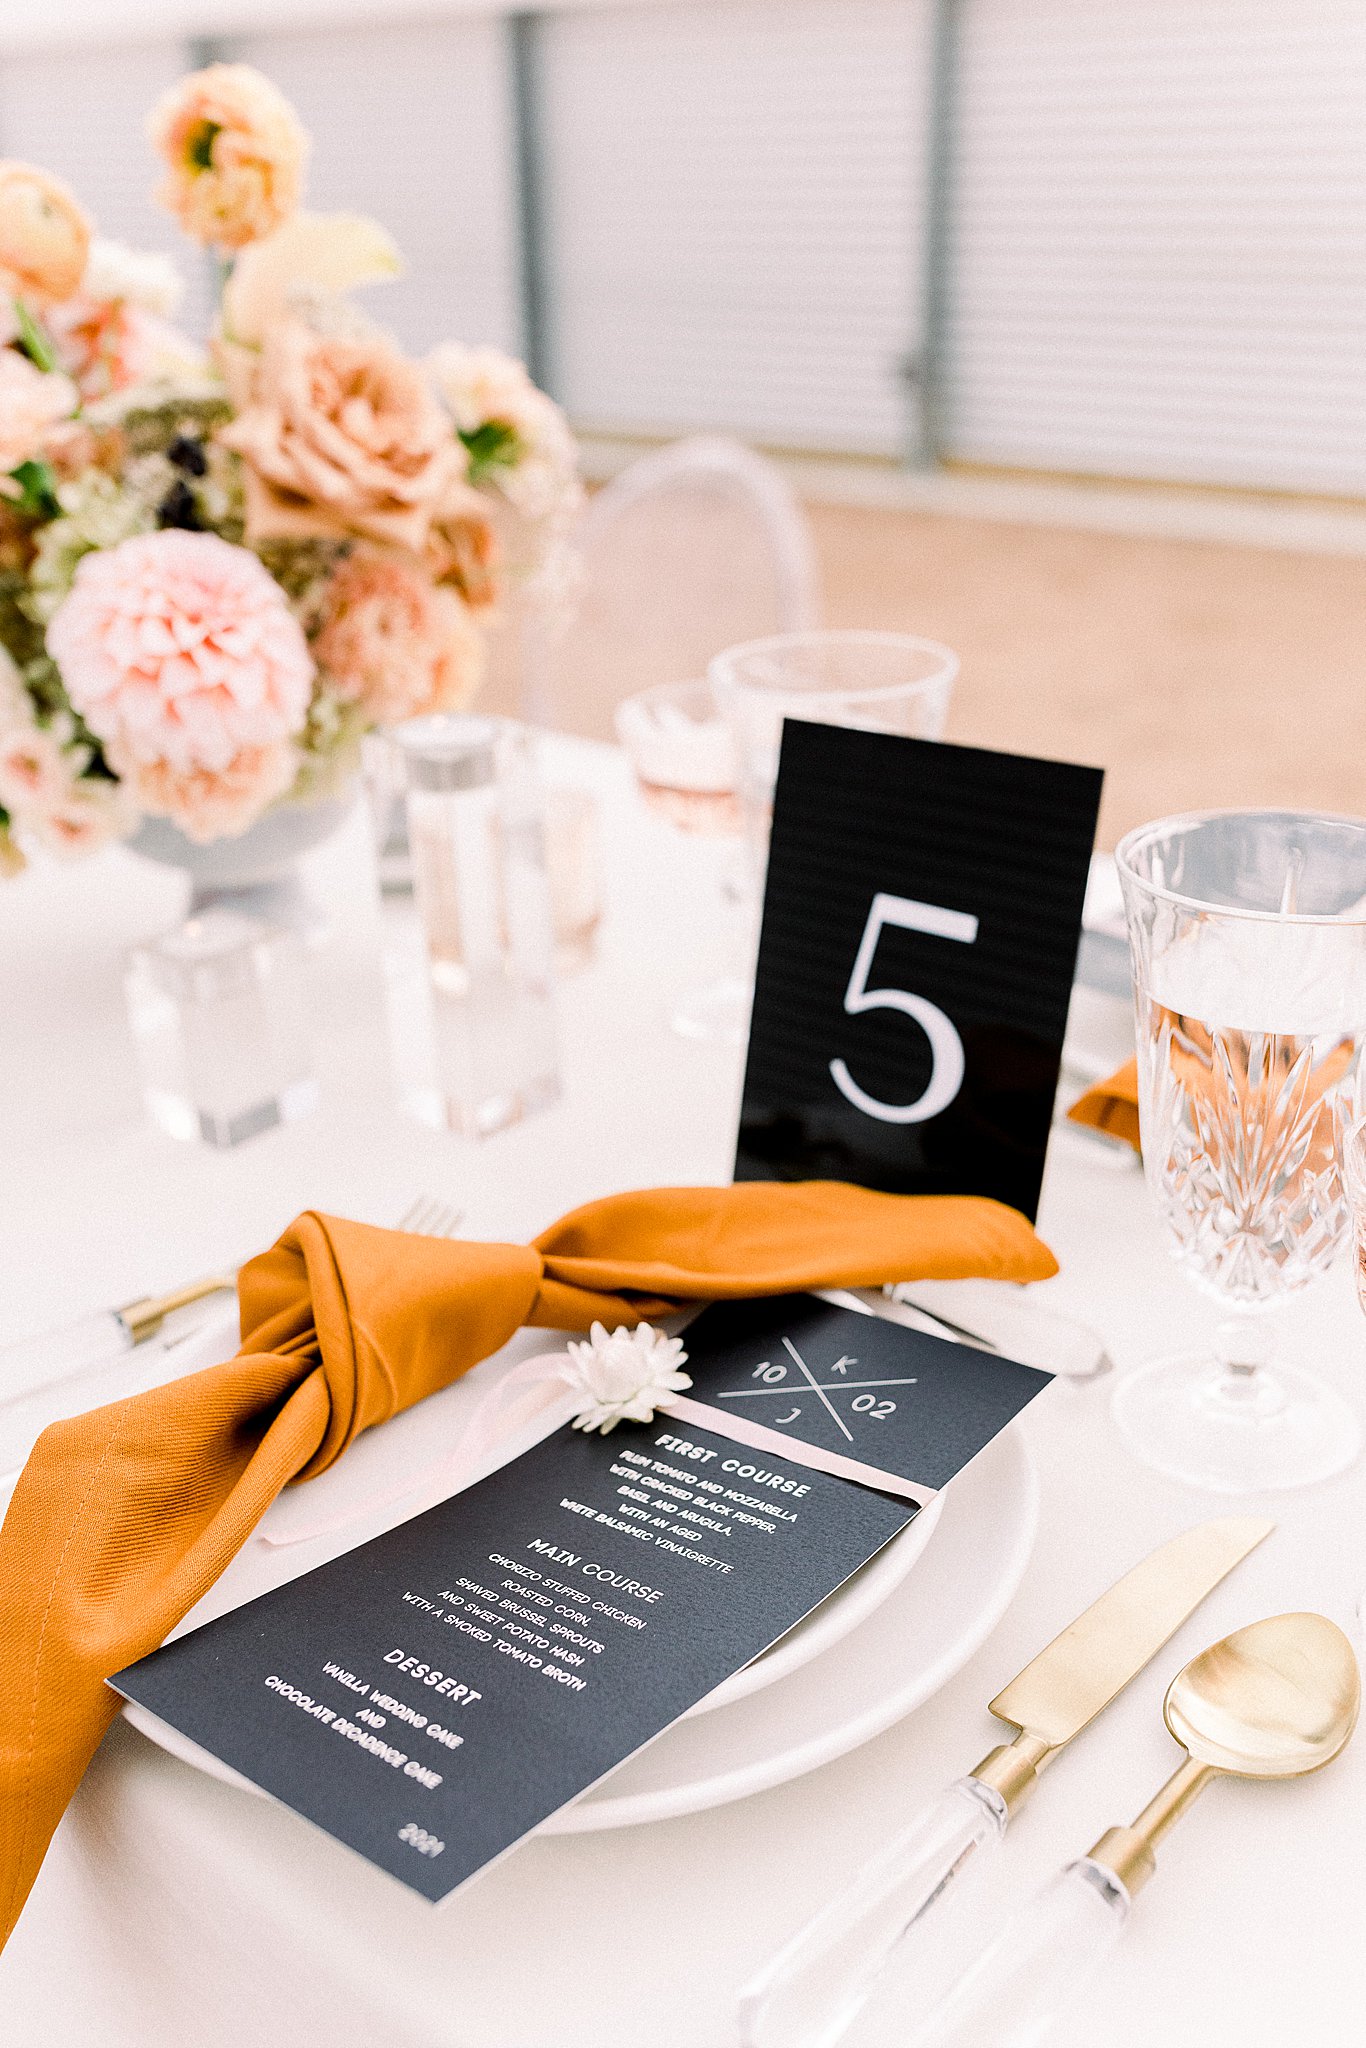 wedding table place setting inspiration, wedding reception menu